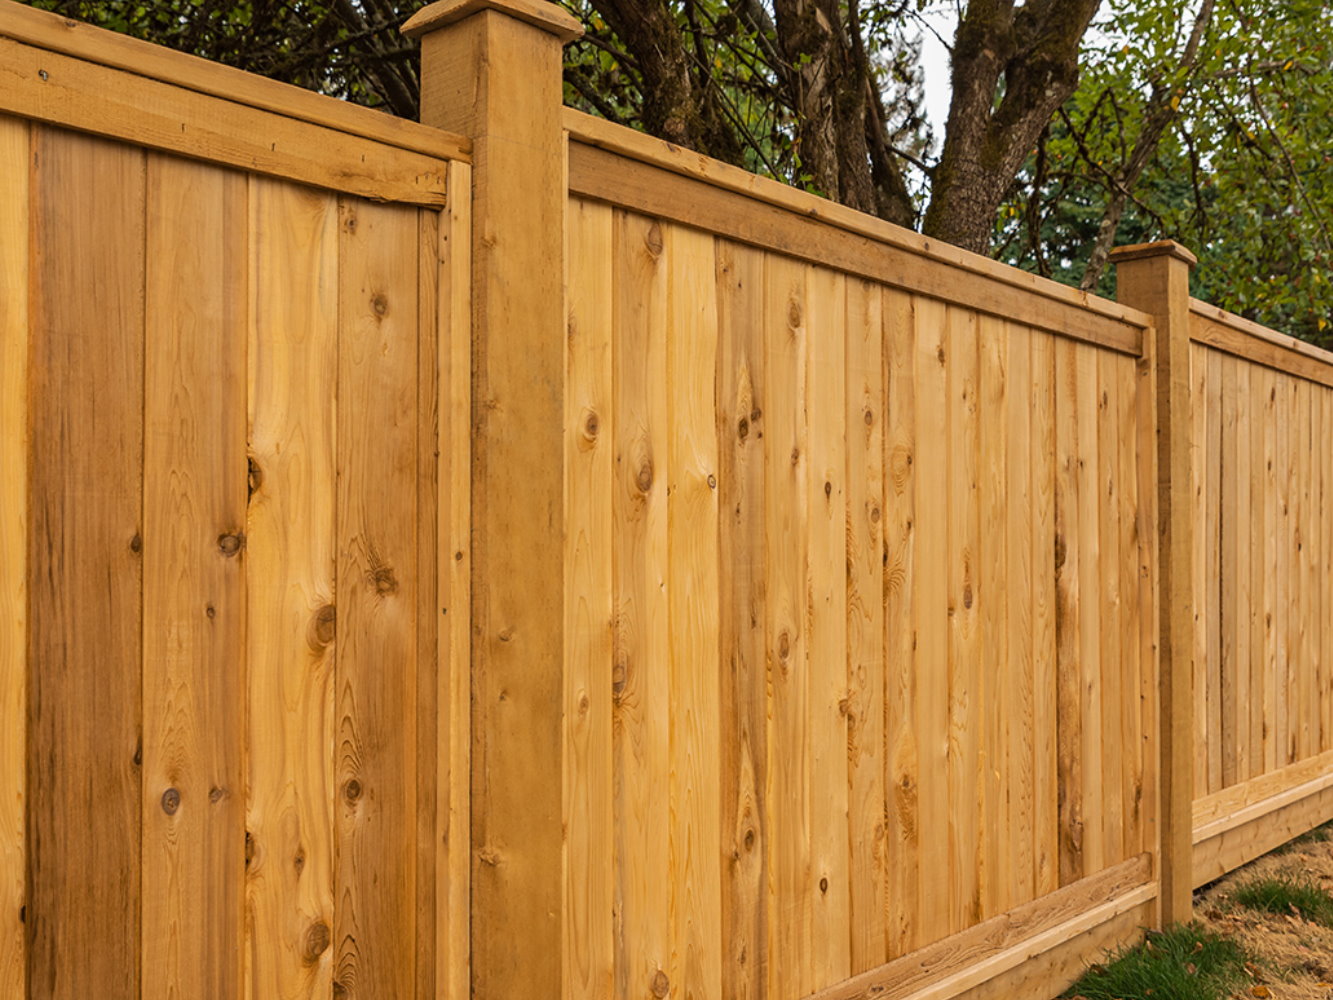 Douglas GA cap and trim style wood fence